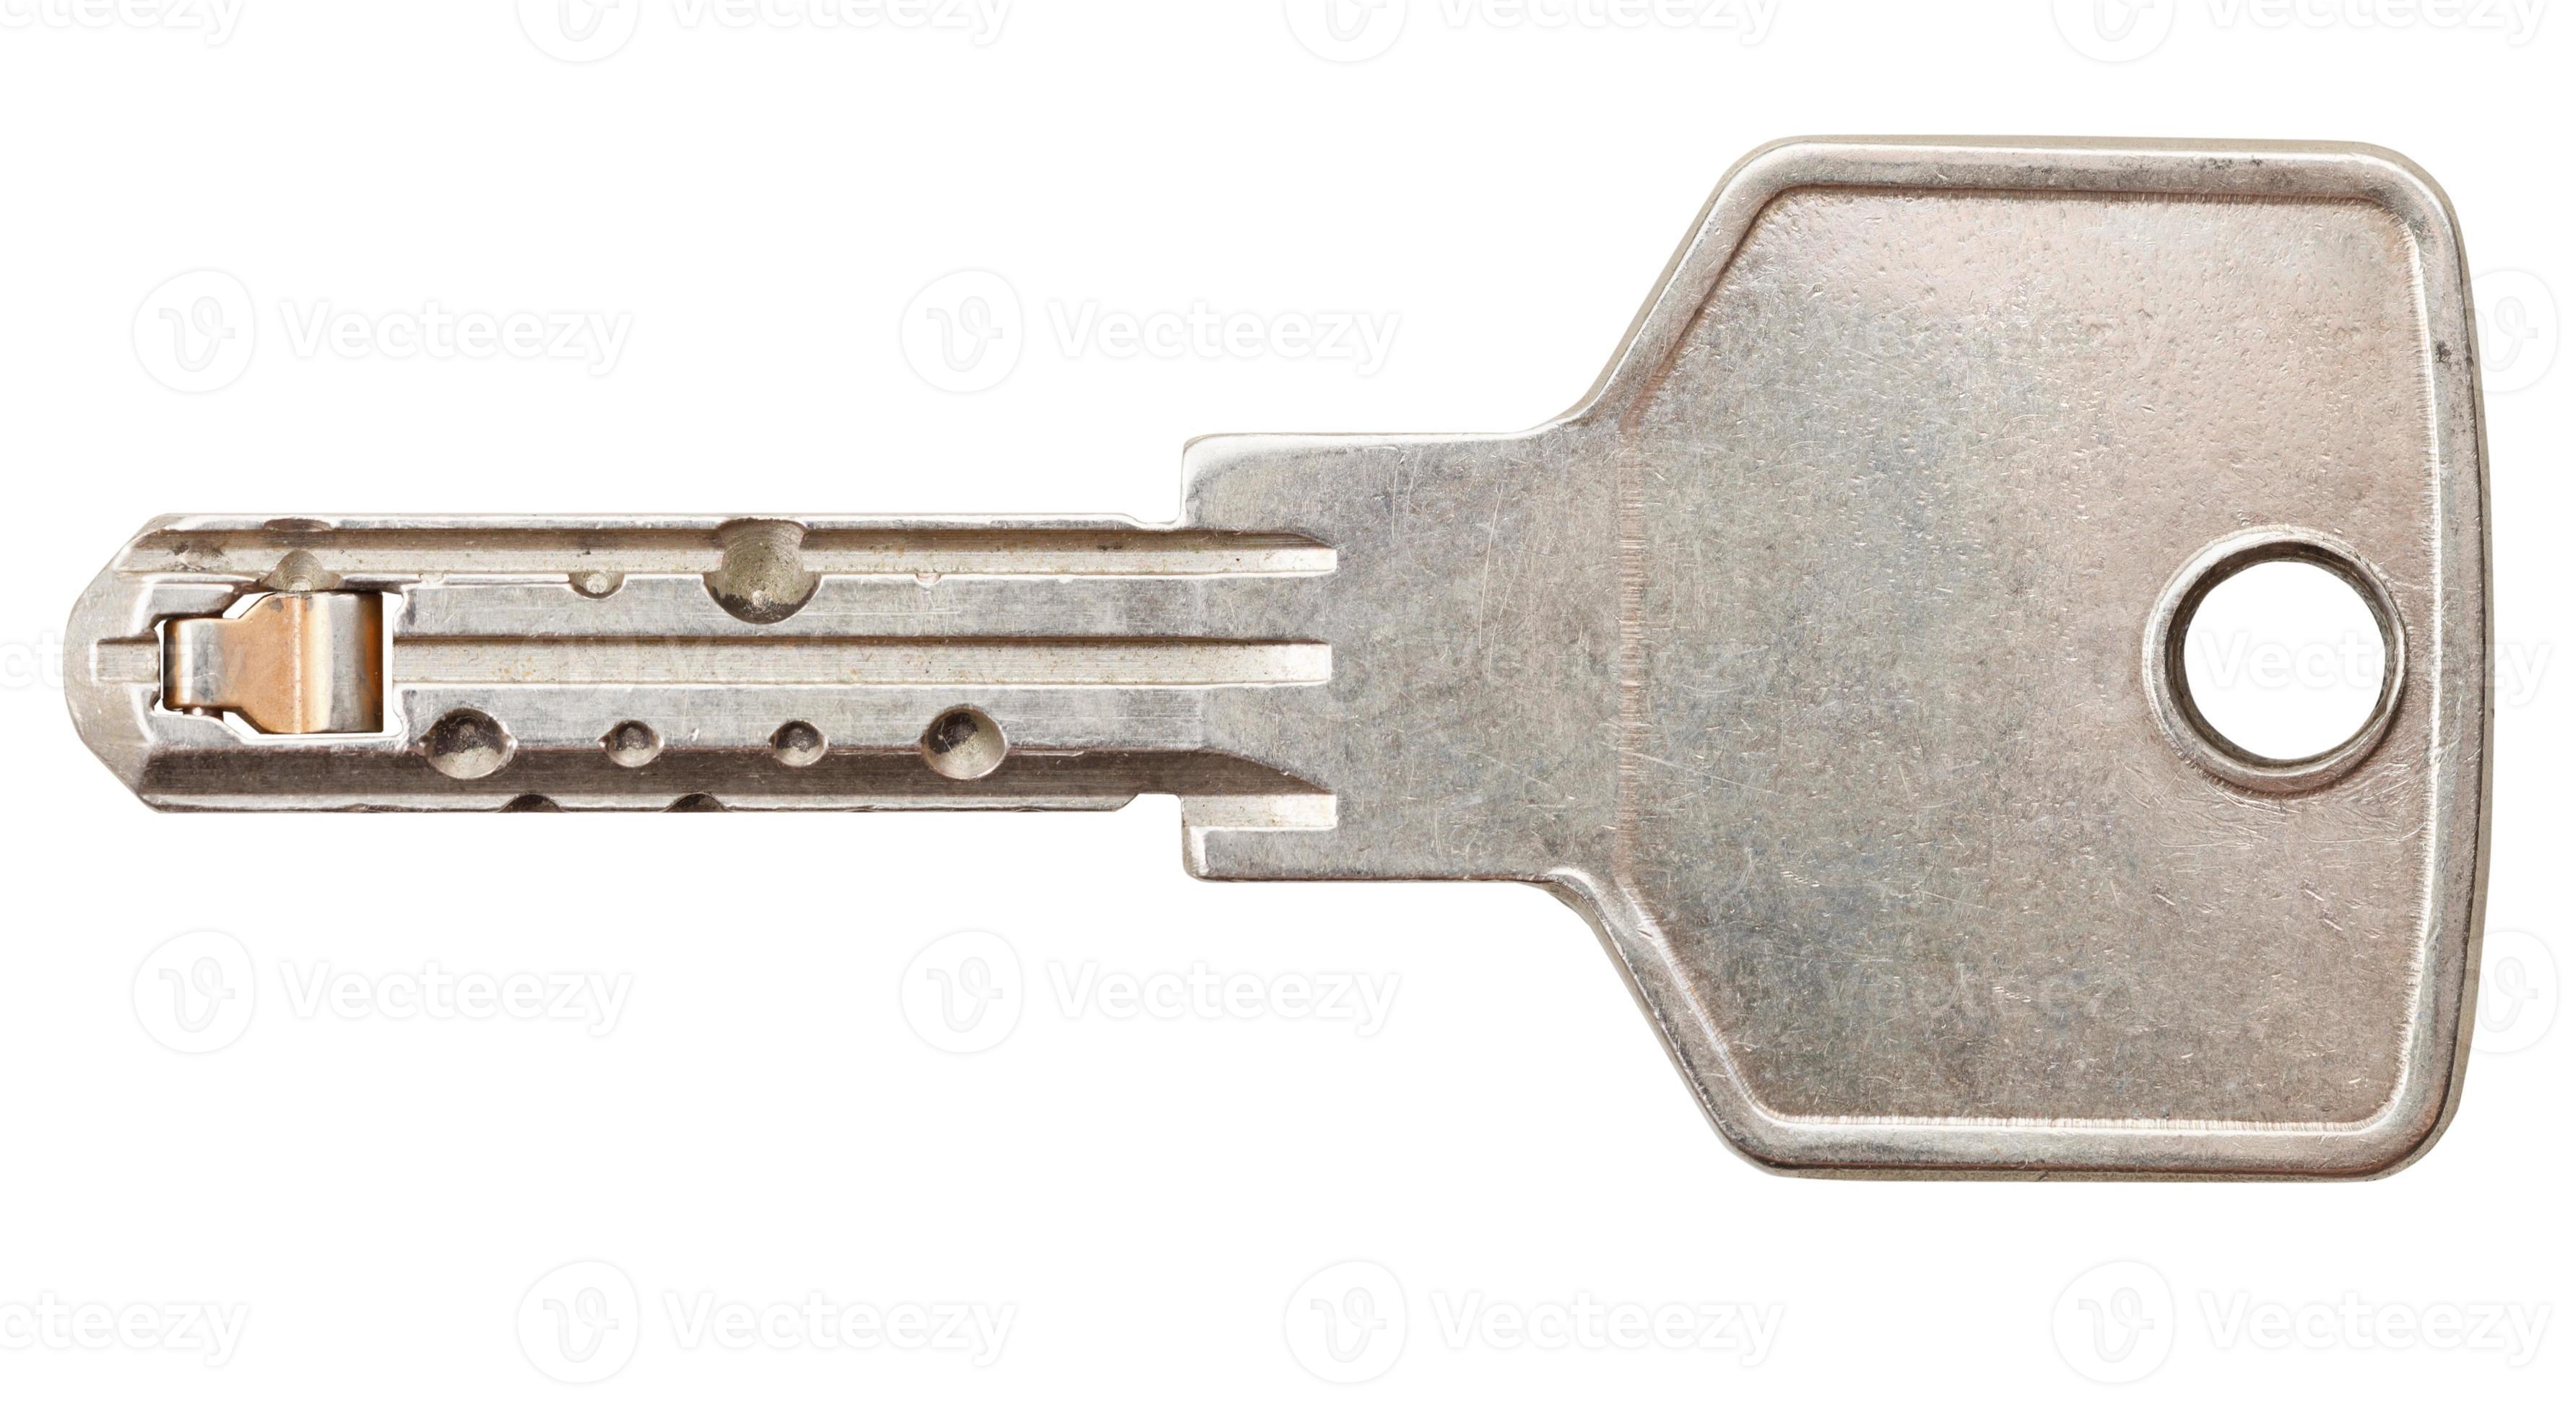 https://static.vecteezy.com/system/resources/previews/012/243/582/large_2x/steel-door-key-for-pin-tumbler-lock-photo.jpg